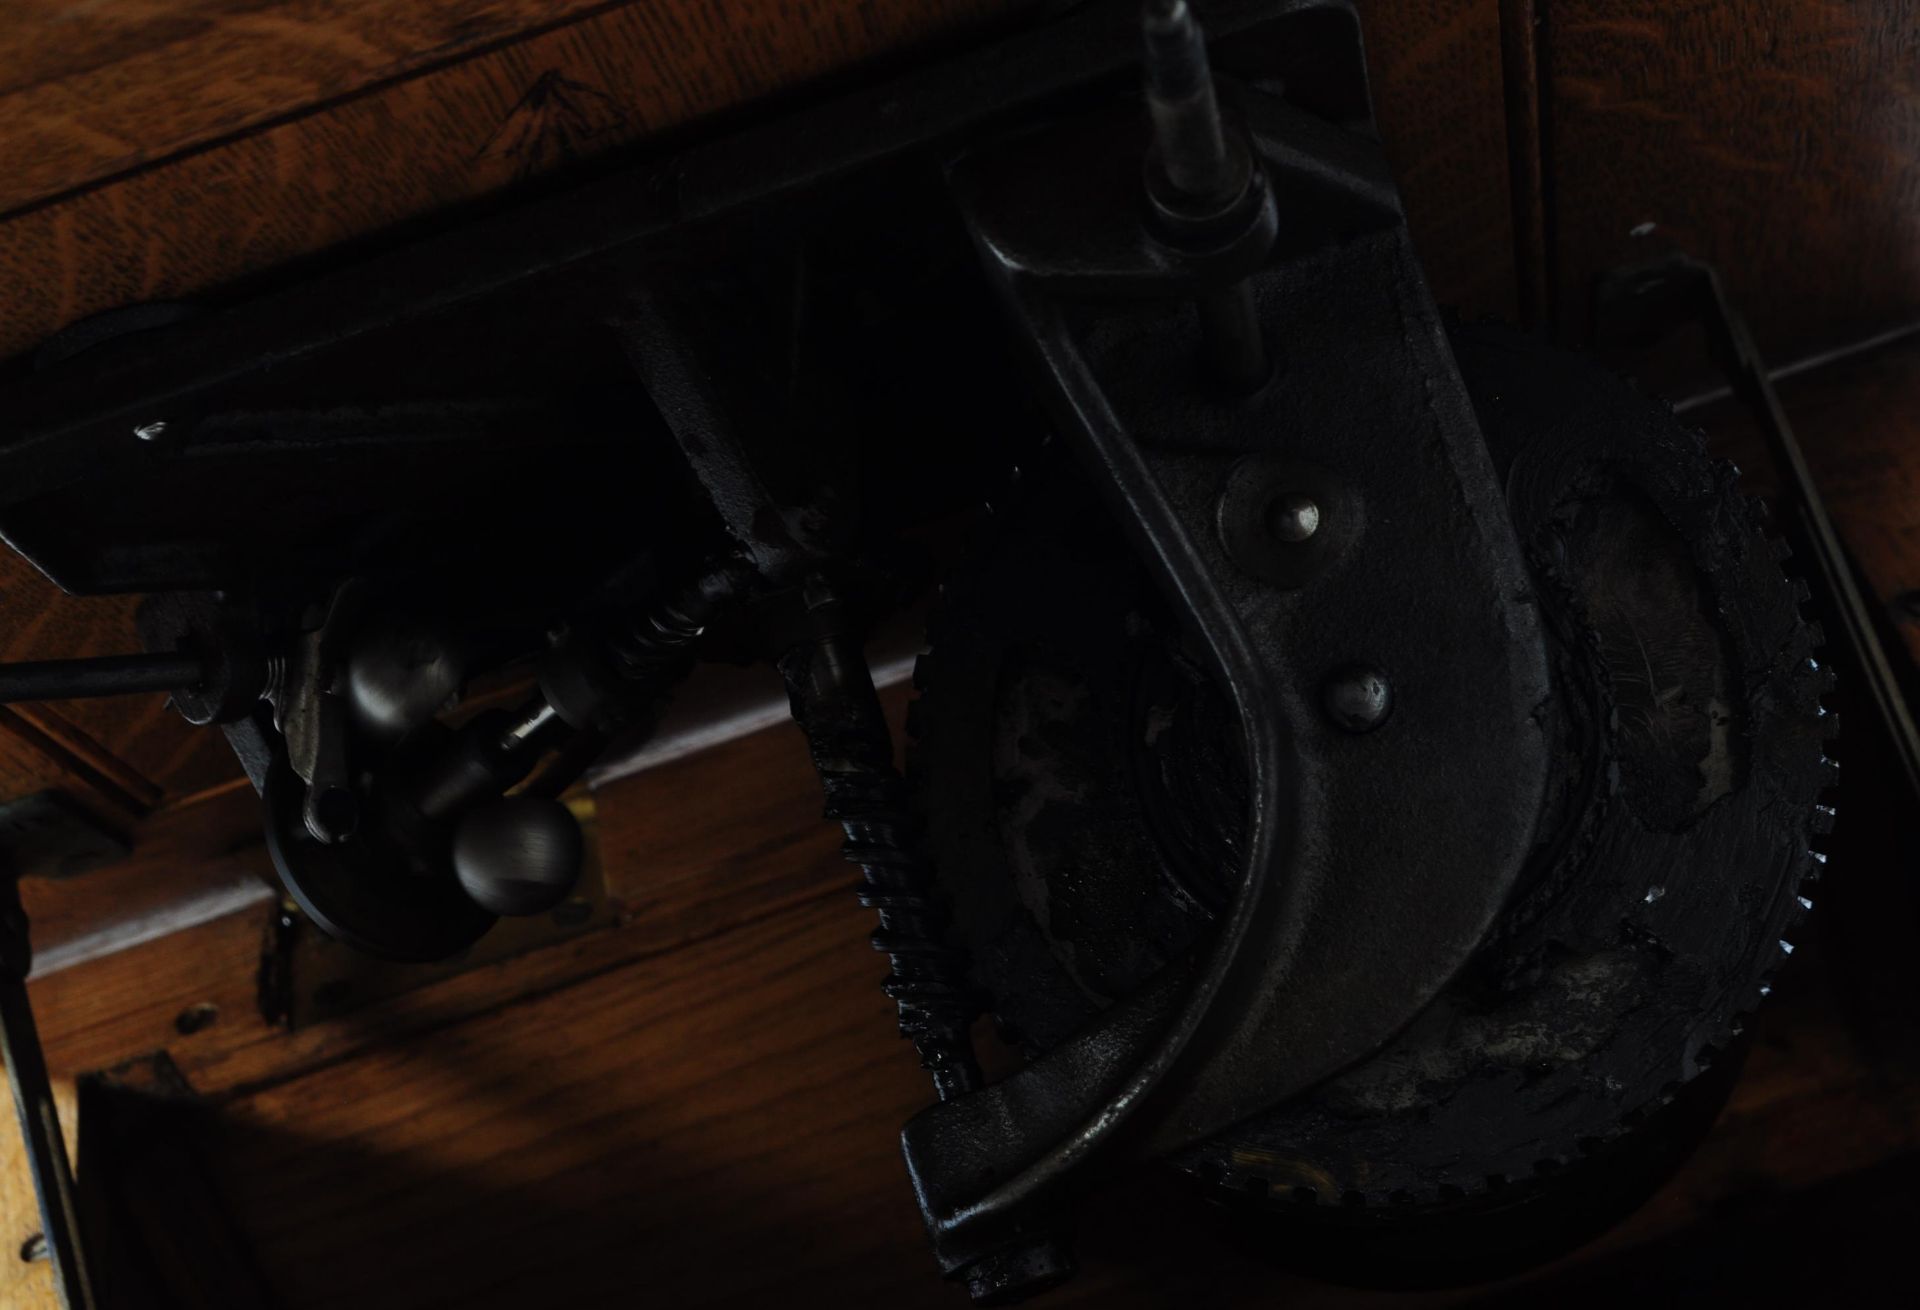 HMV MONARCH MODEL V OAK GRAMOPHONE WITH WOODEN HORN - Image 6 of 7